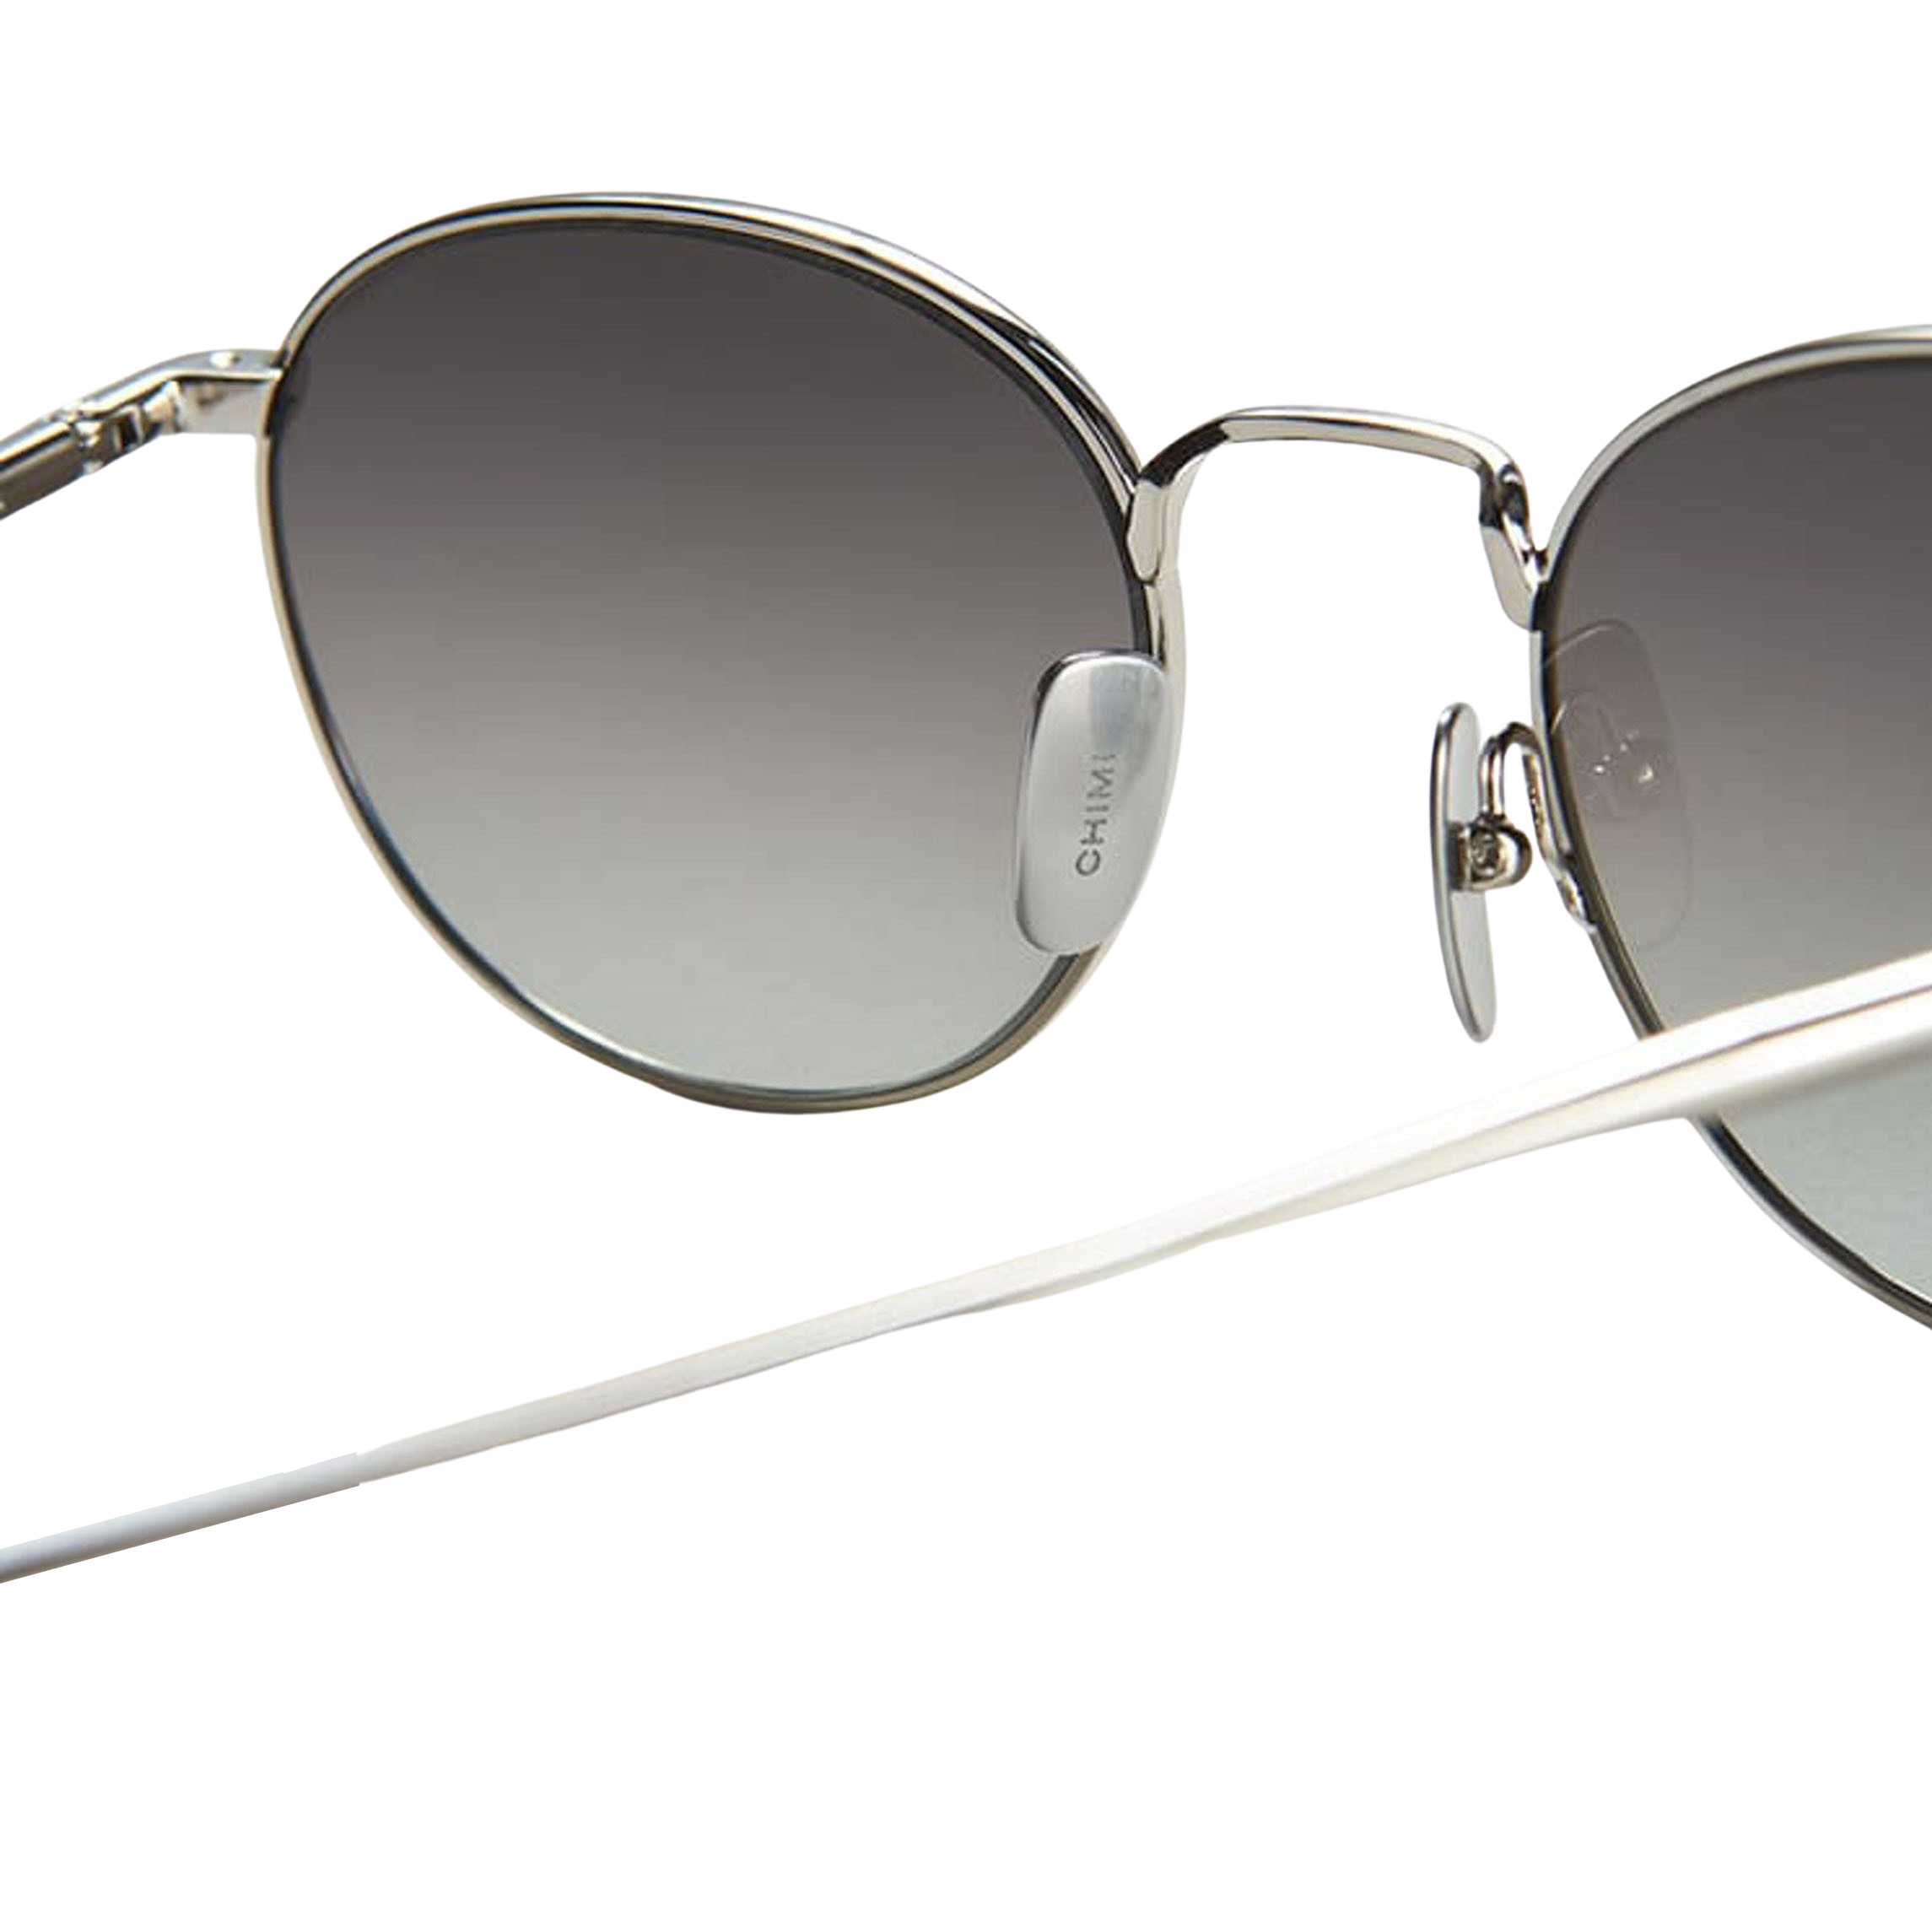 Chimi Eyewear Steel Round Grey Lenses Sunglasses 50mm Inside